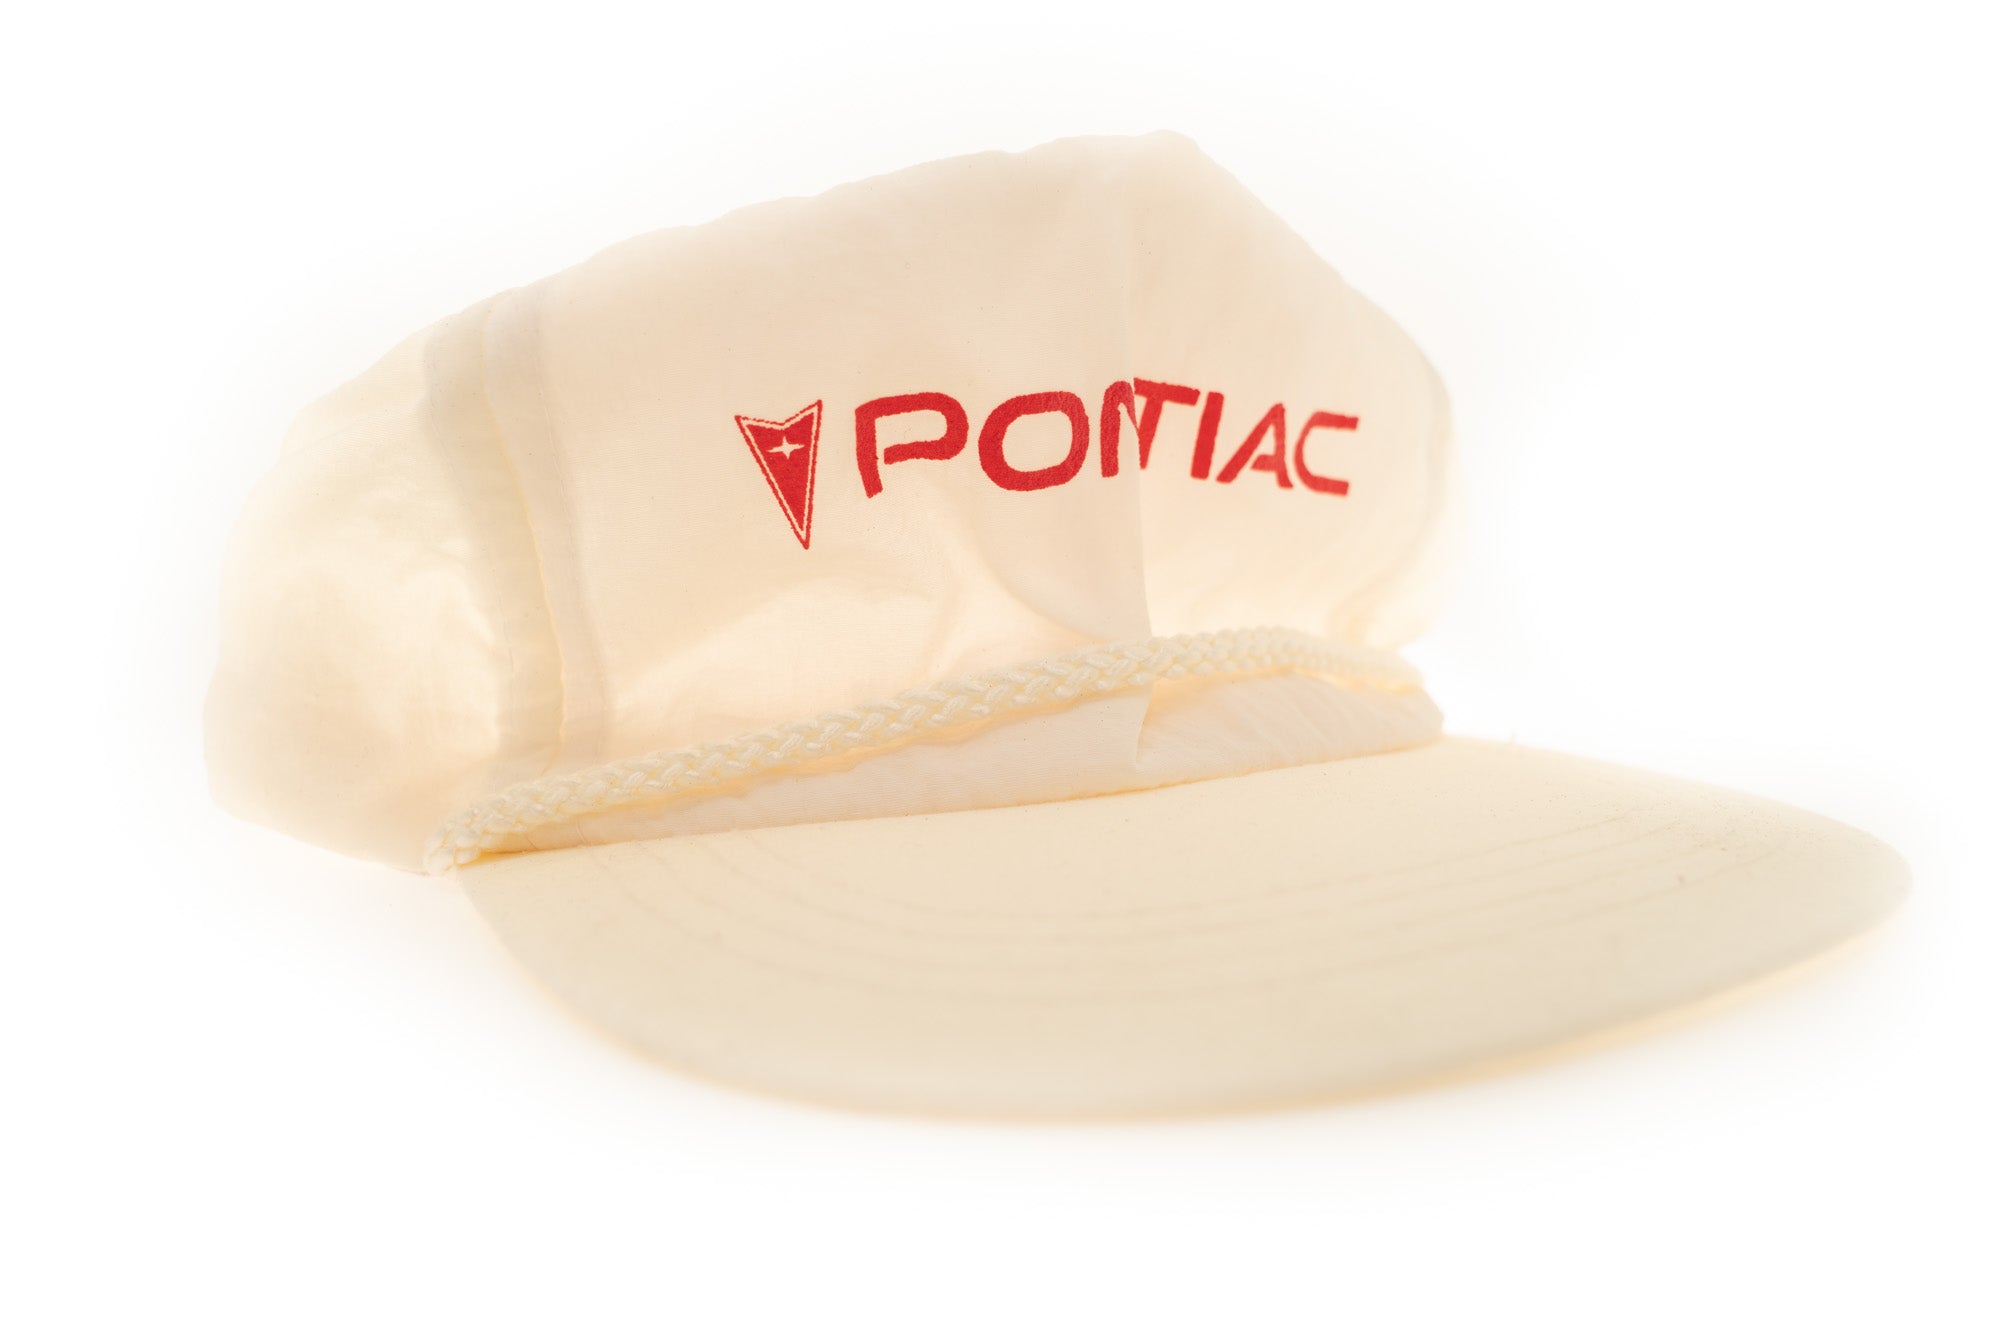 Pontiac white